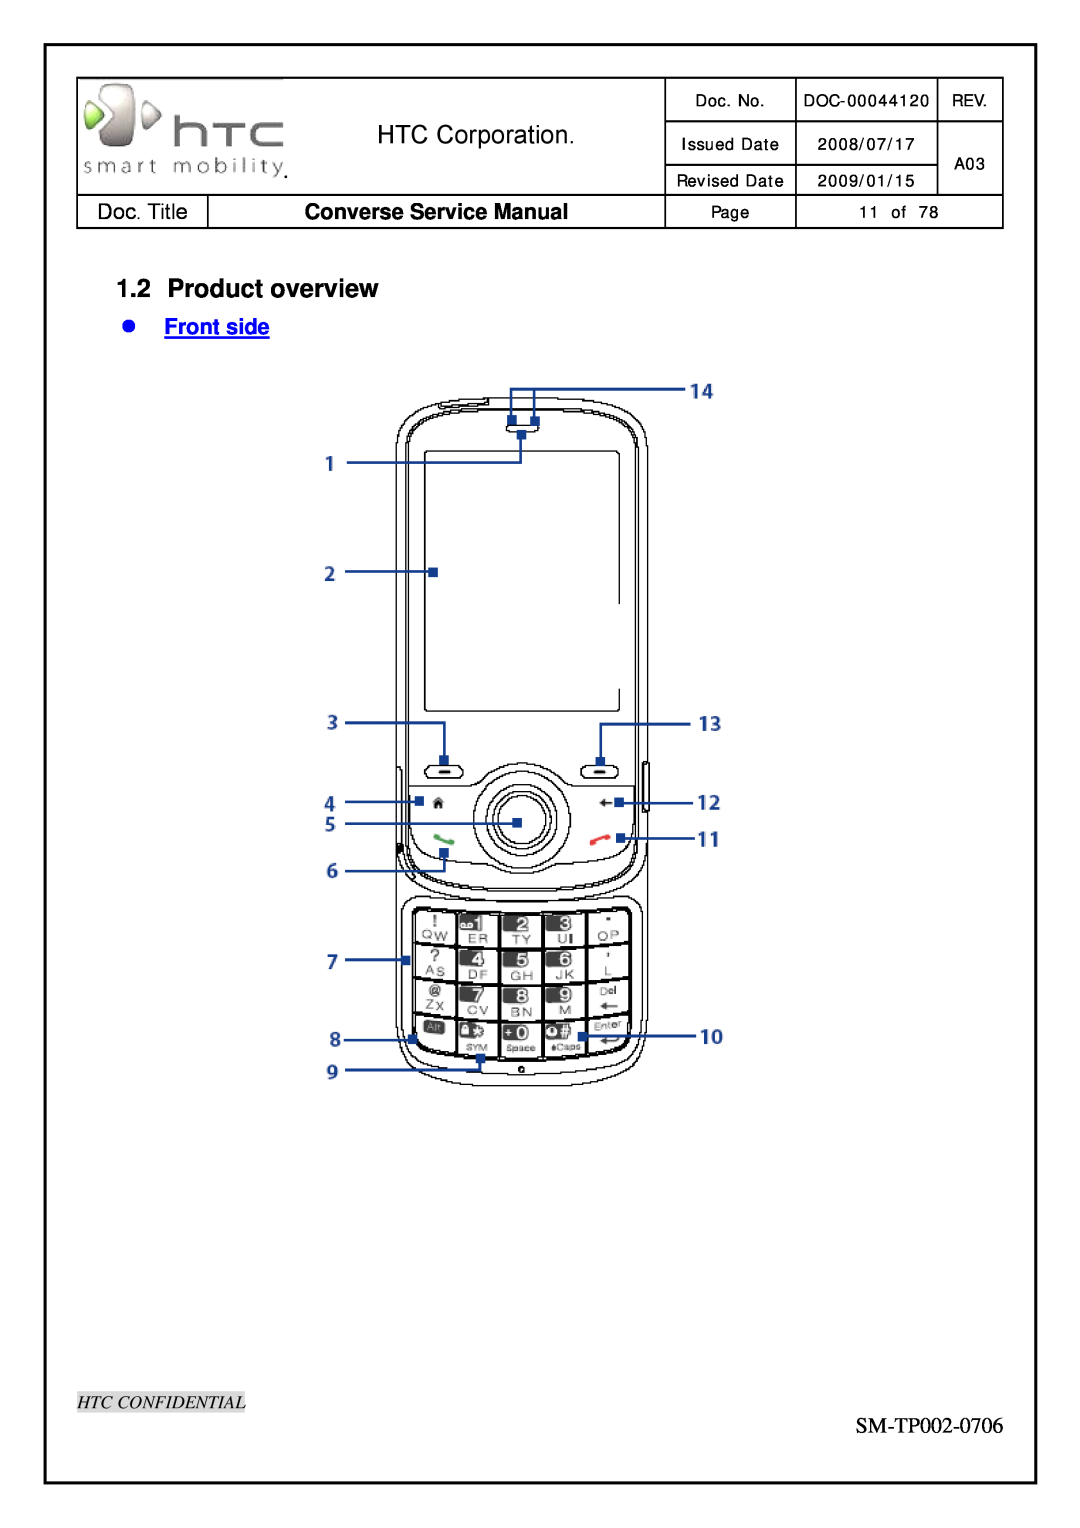 HTC SM-TP002-0706 Product overview, z Front side, HTC Corporation, Converse Service Manual, Htc Confidential, Doc. No 